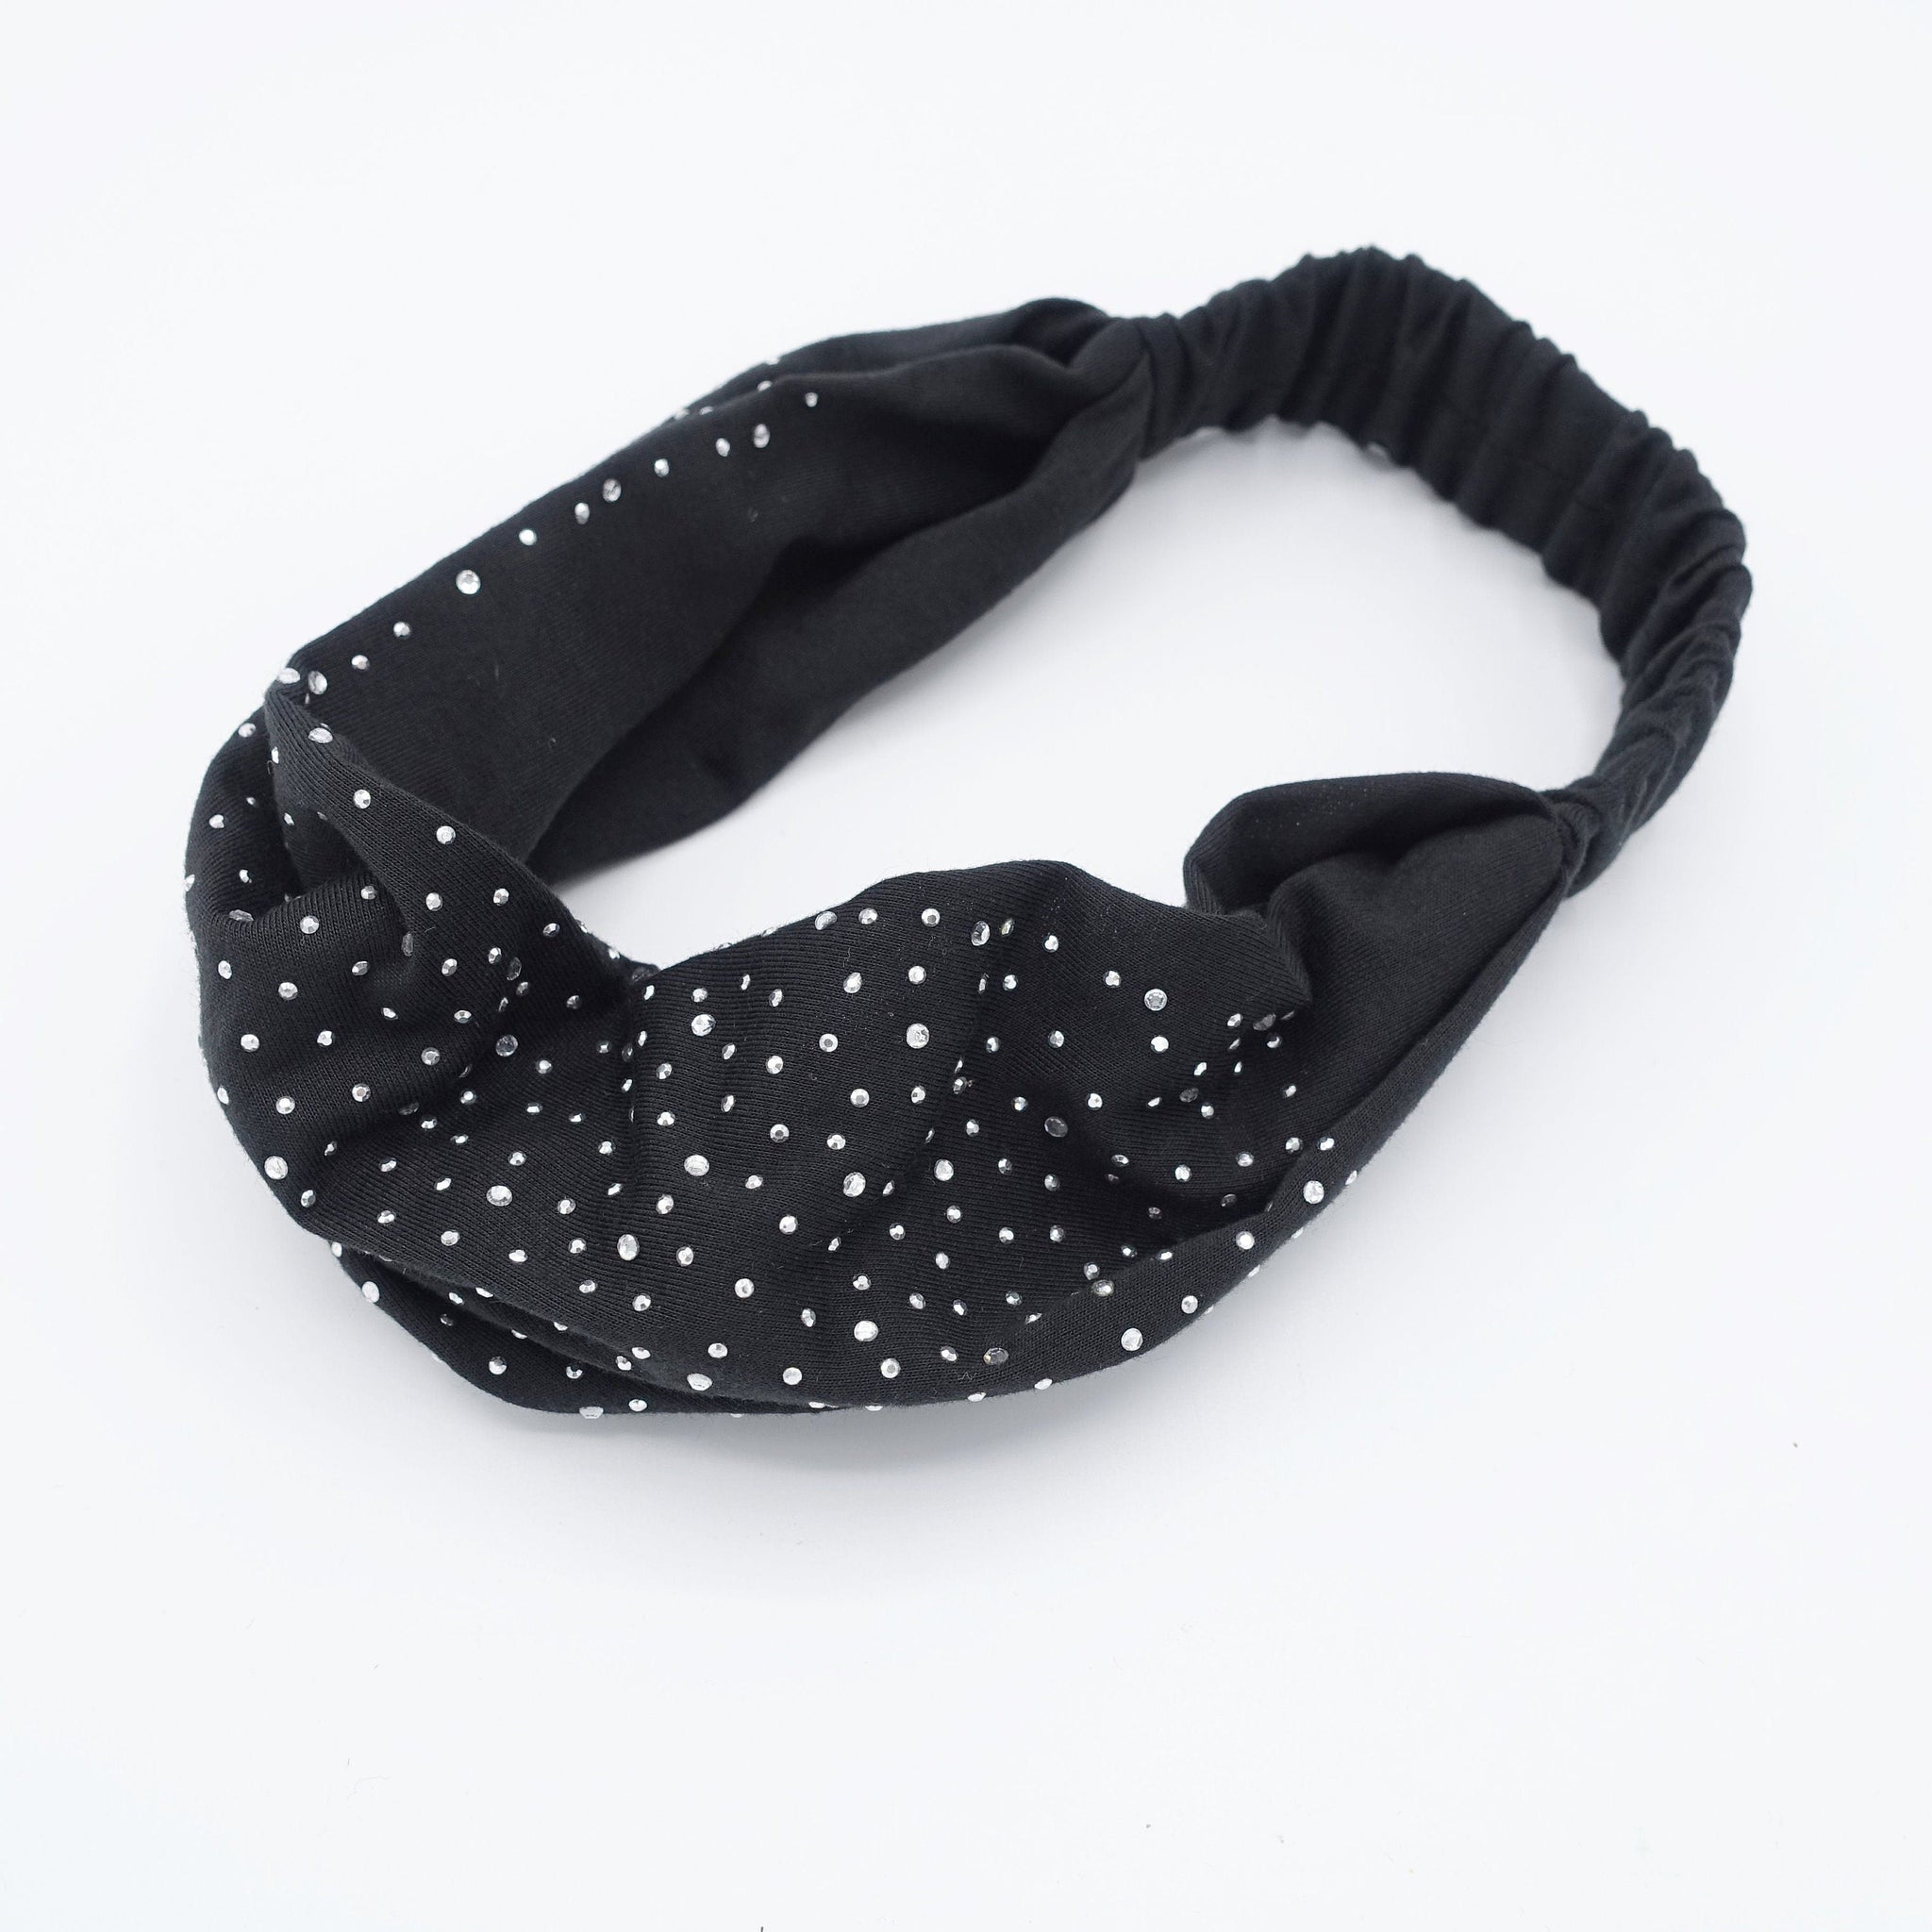 veryshine.com Headband Black hotfix embellished headband Cotton elastic fashion headband for women